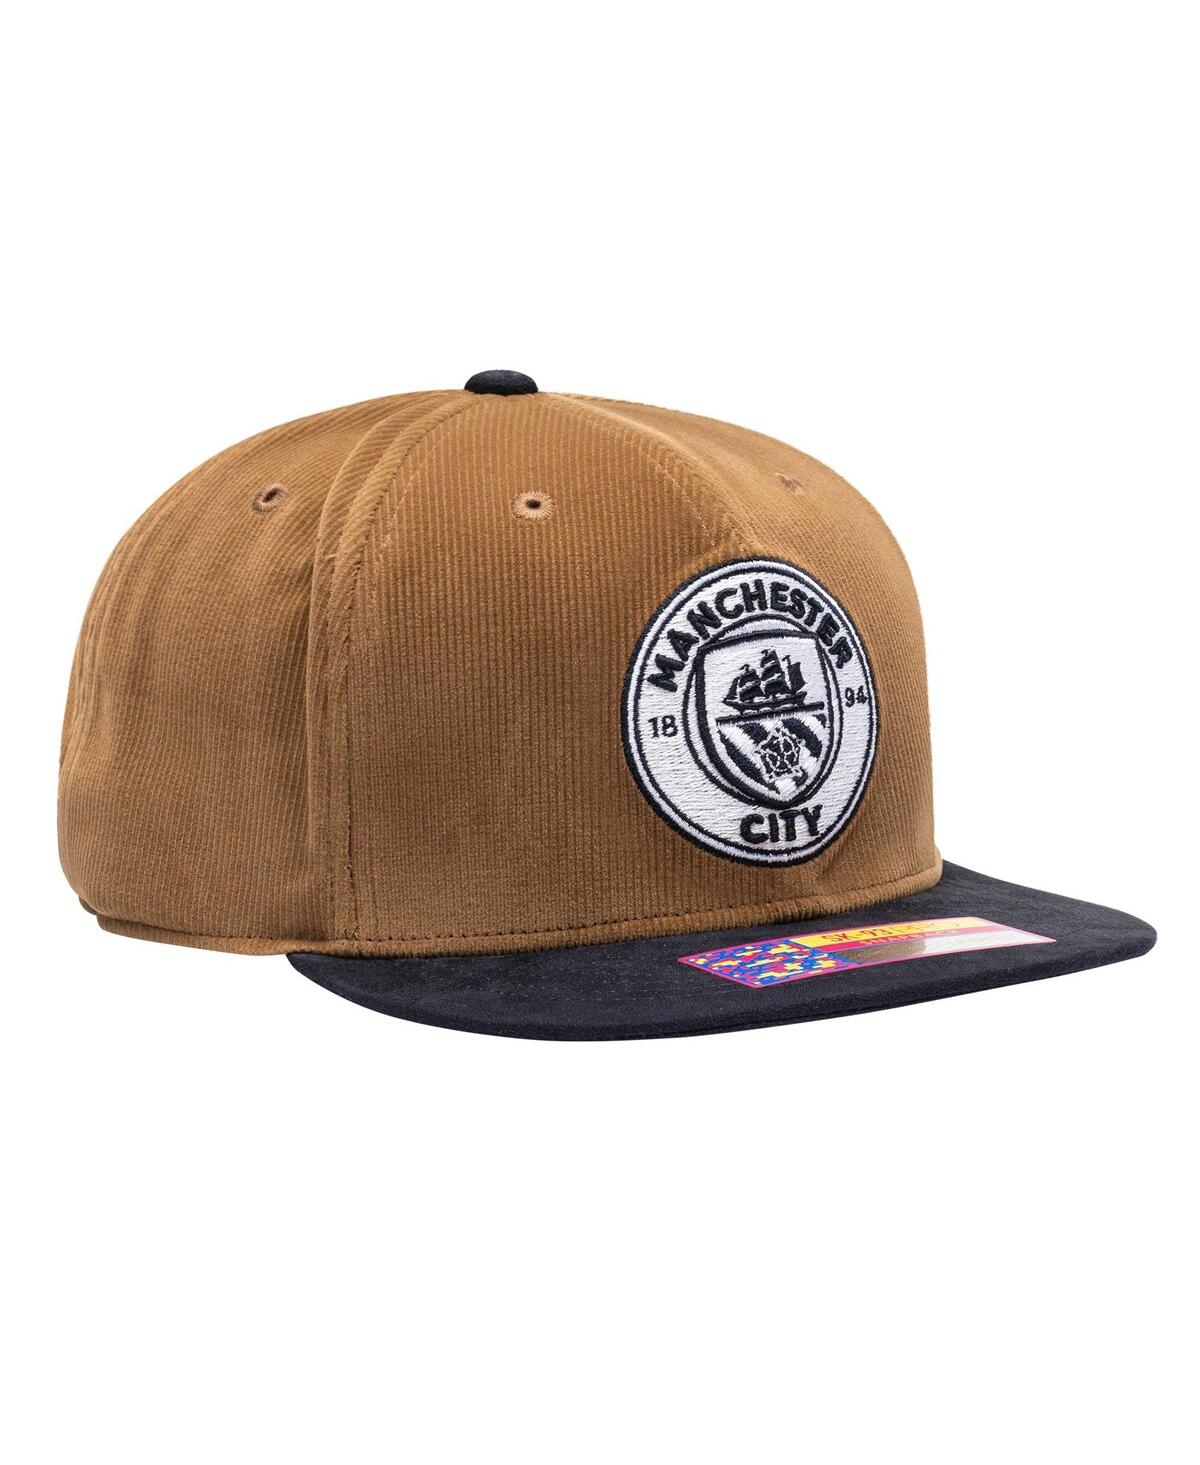 Shop Fan Ink Men's Brown Manchester City Cognac Snapback Hat